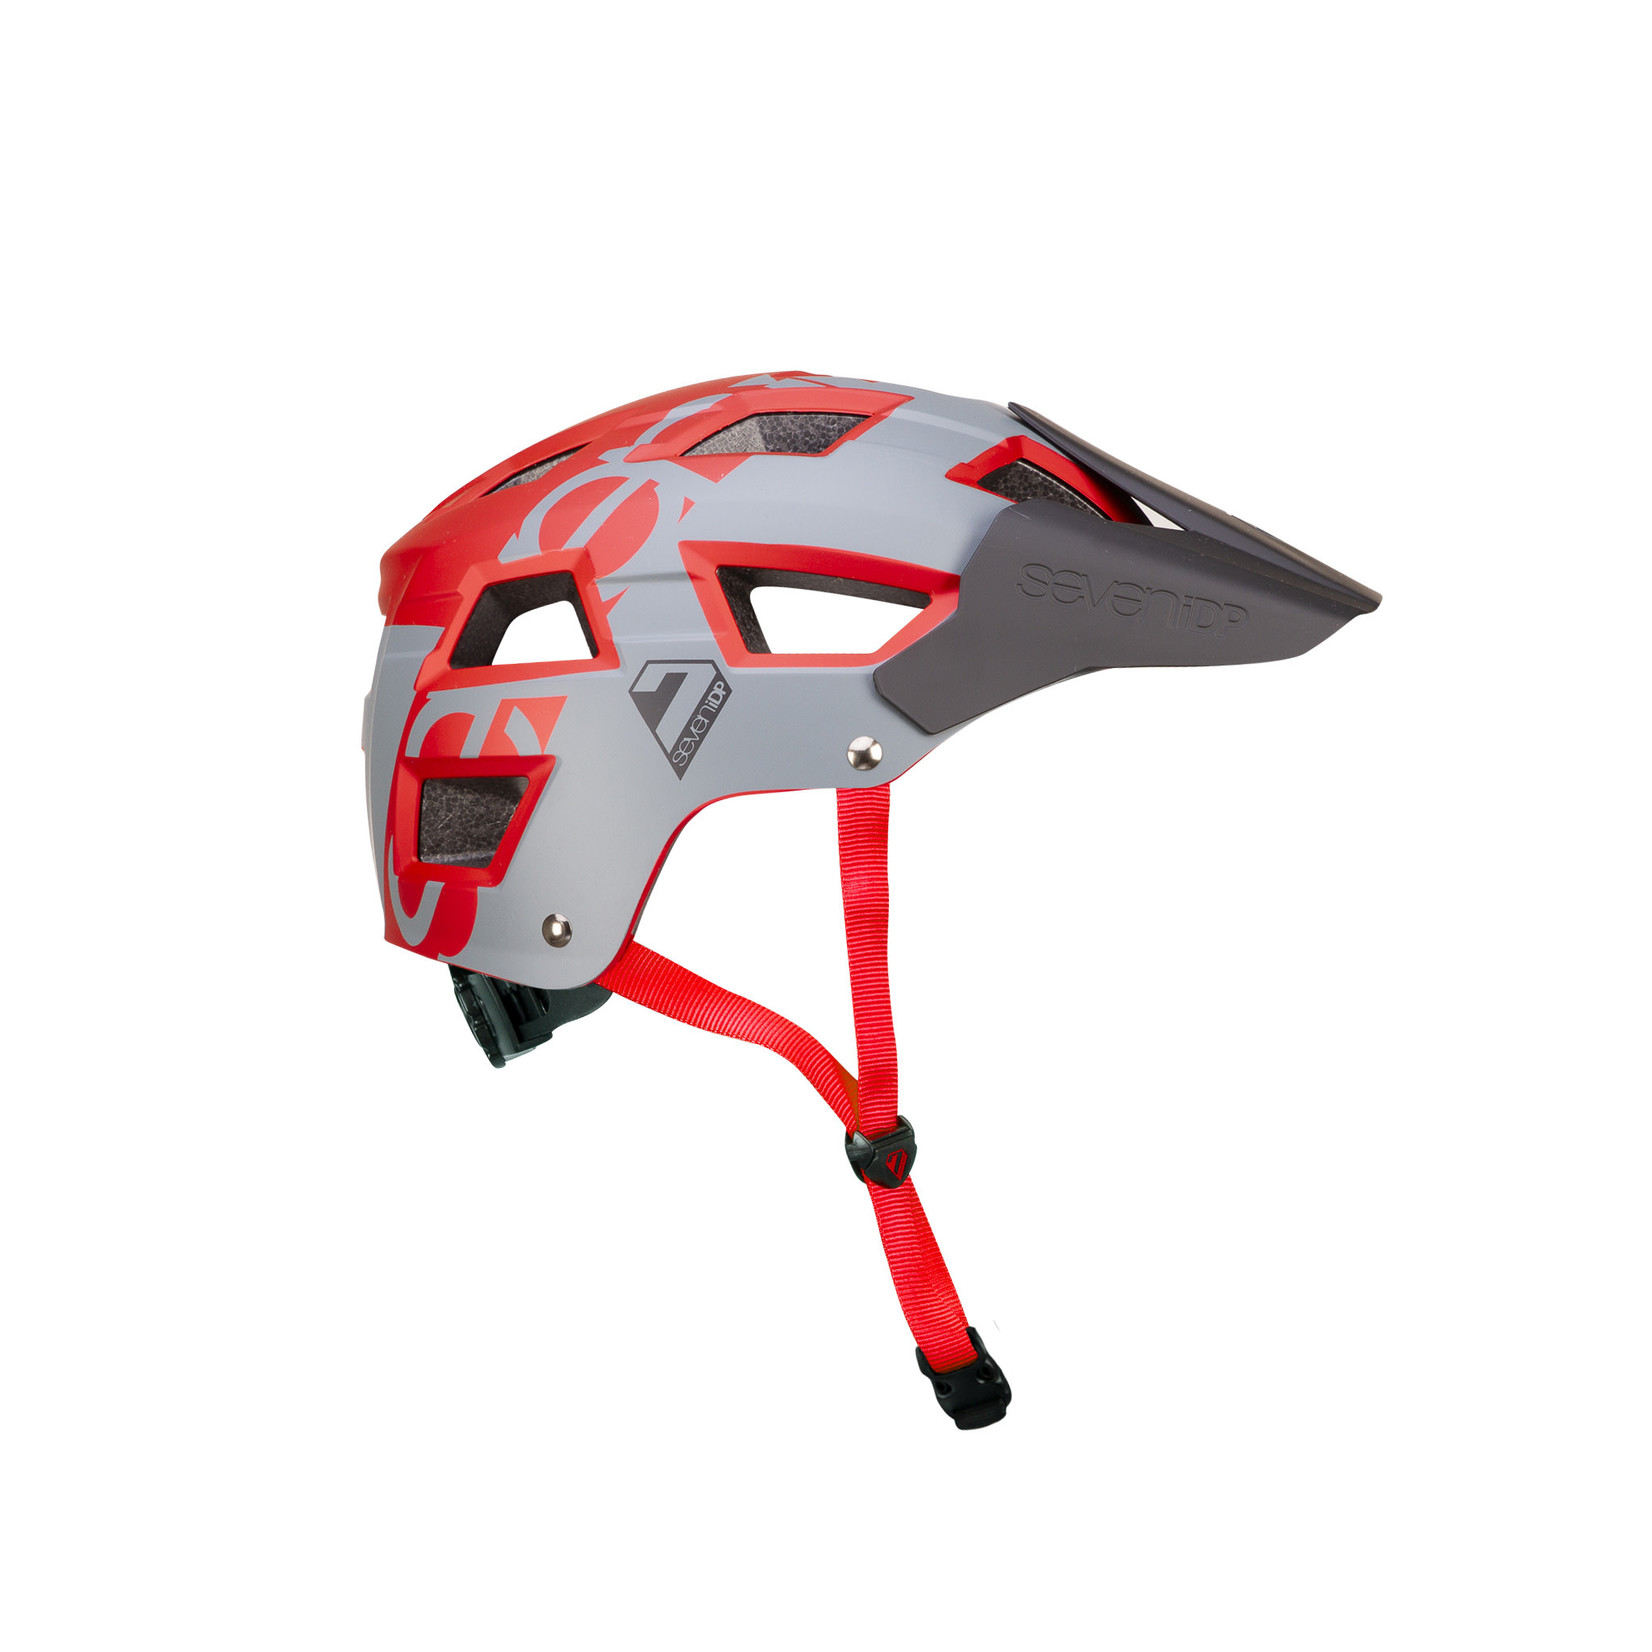 7iDP M-5 Helmet, Red/Grey S/M (54-58cm)